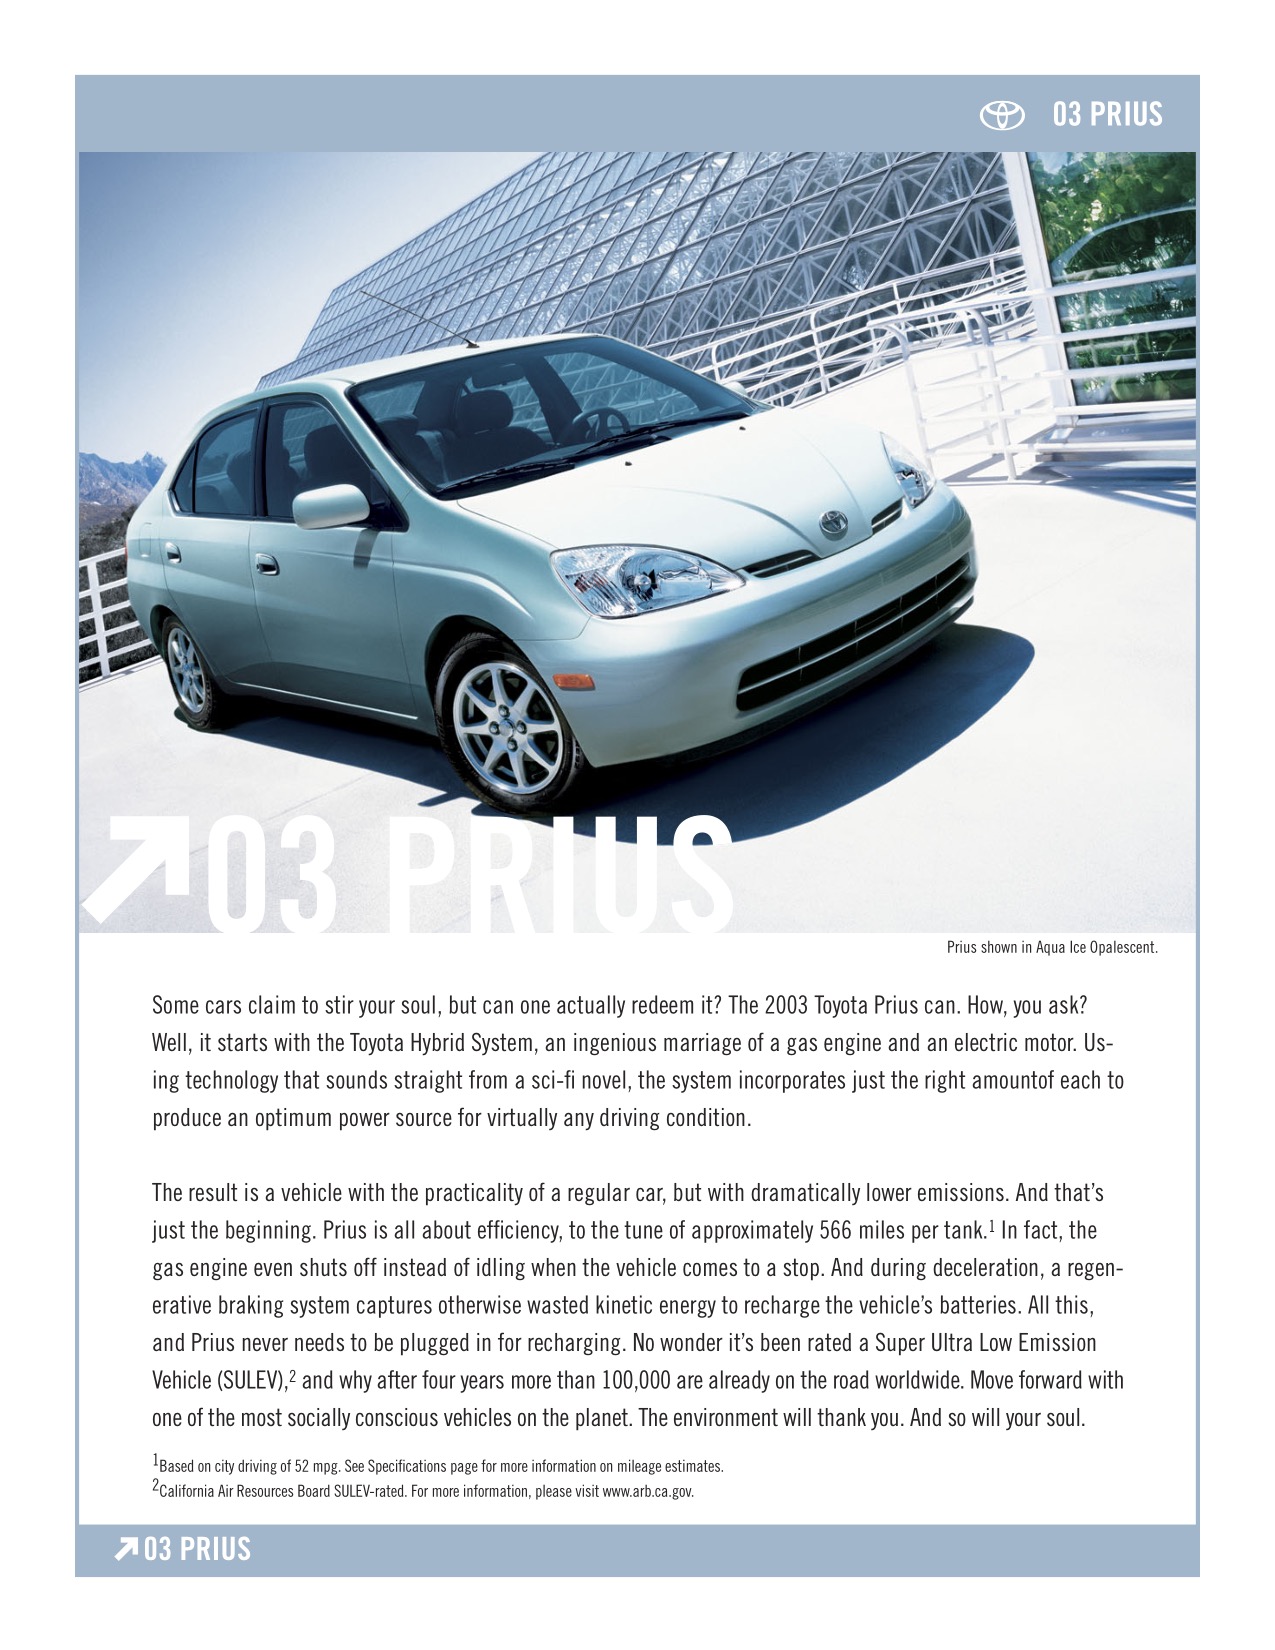 2003 Toyota Prius Brochure